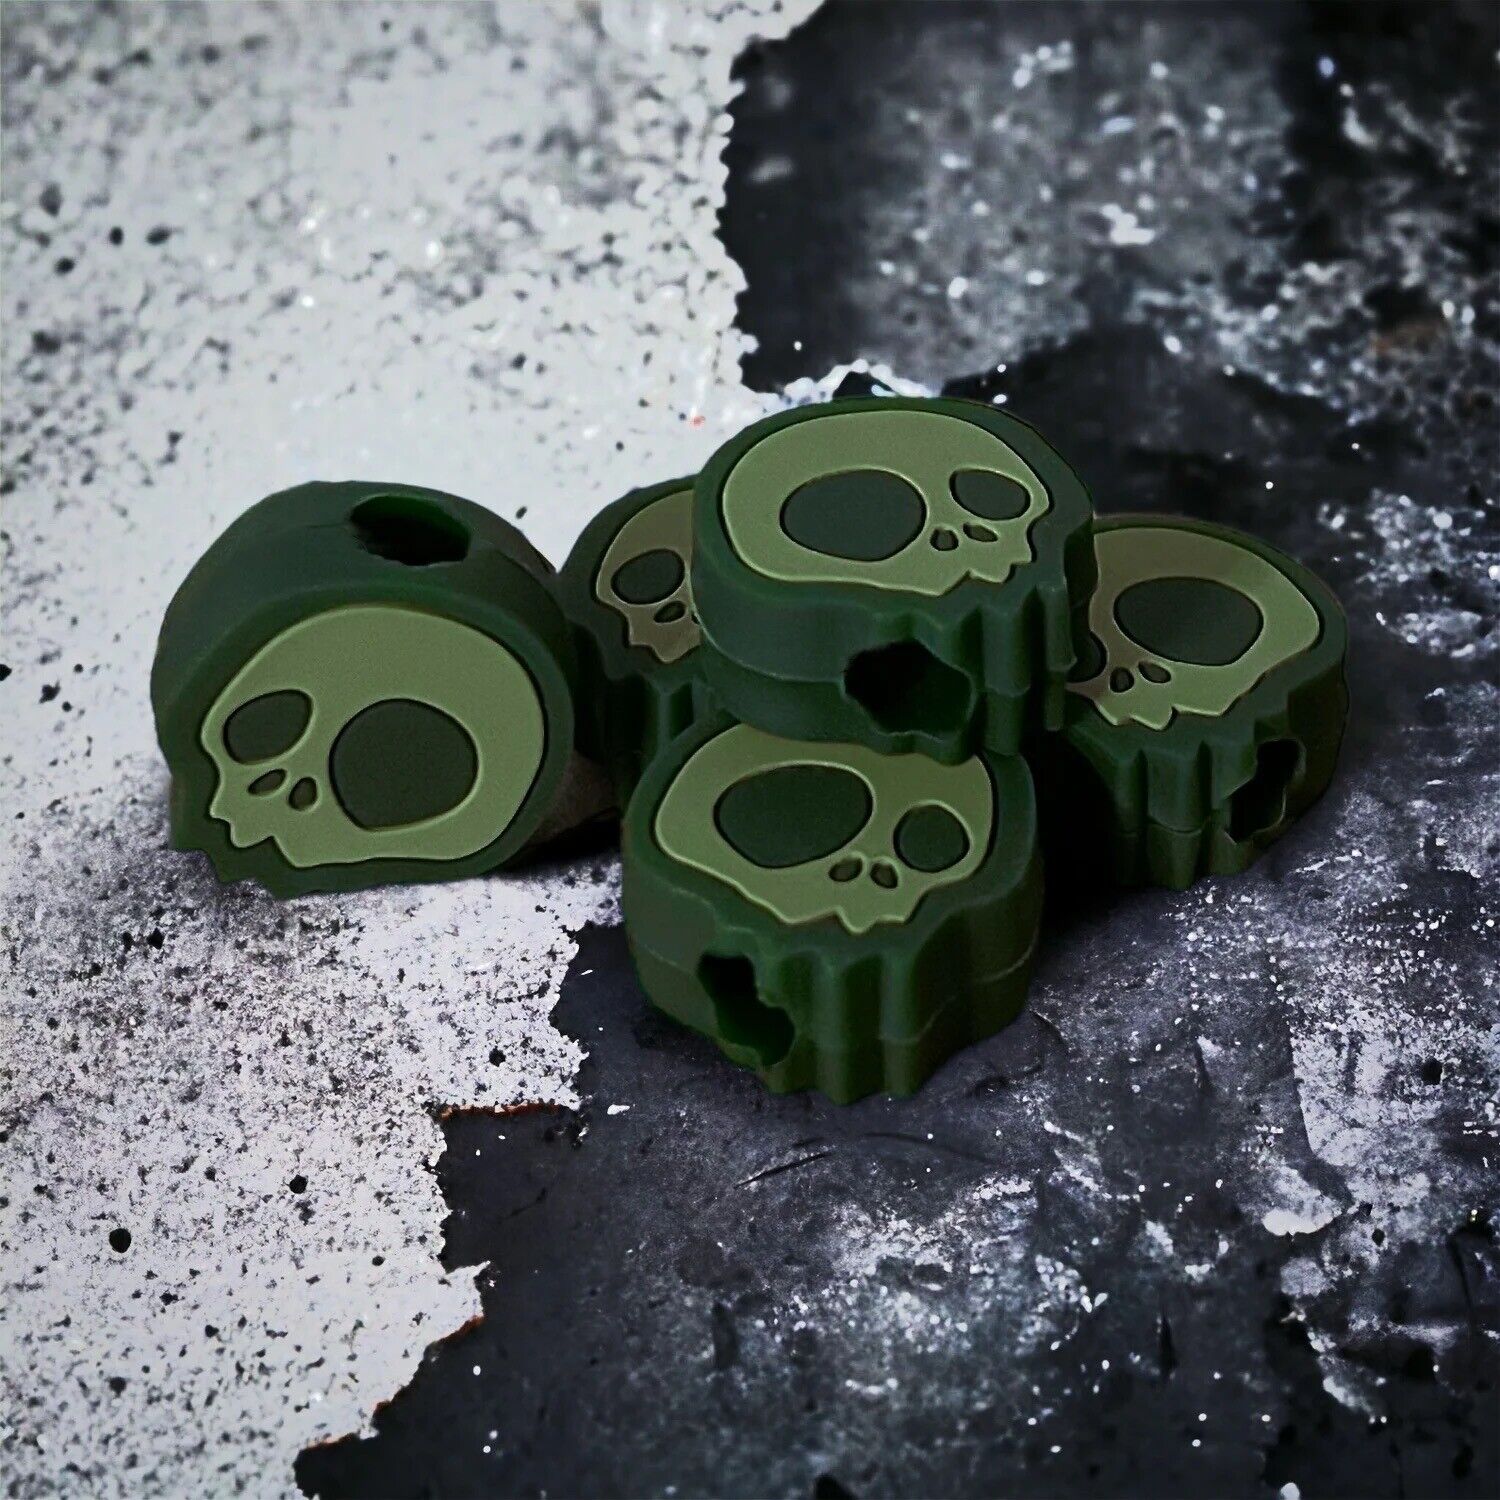 Maniac EDC “Evergreen” PVC Skull Bead